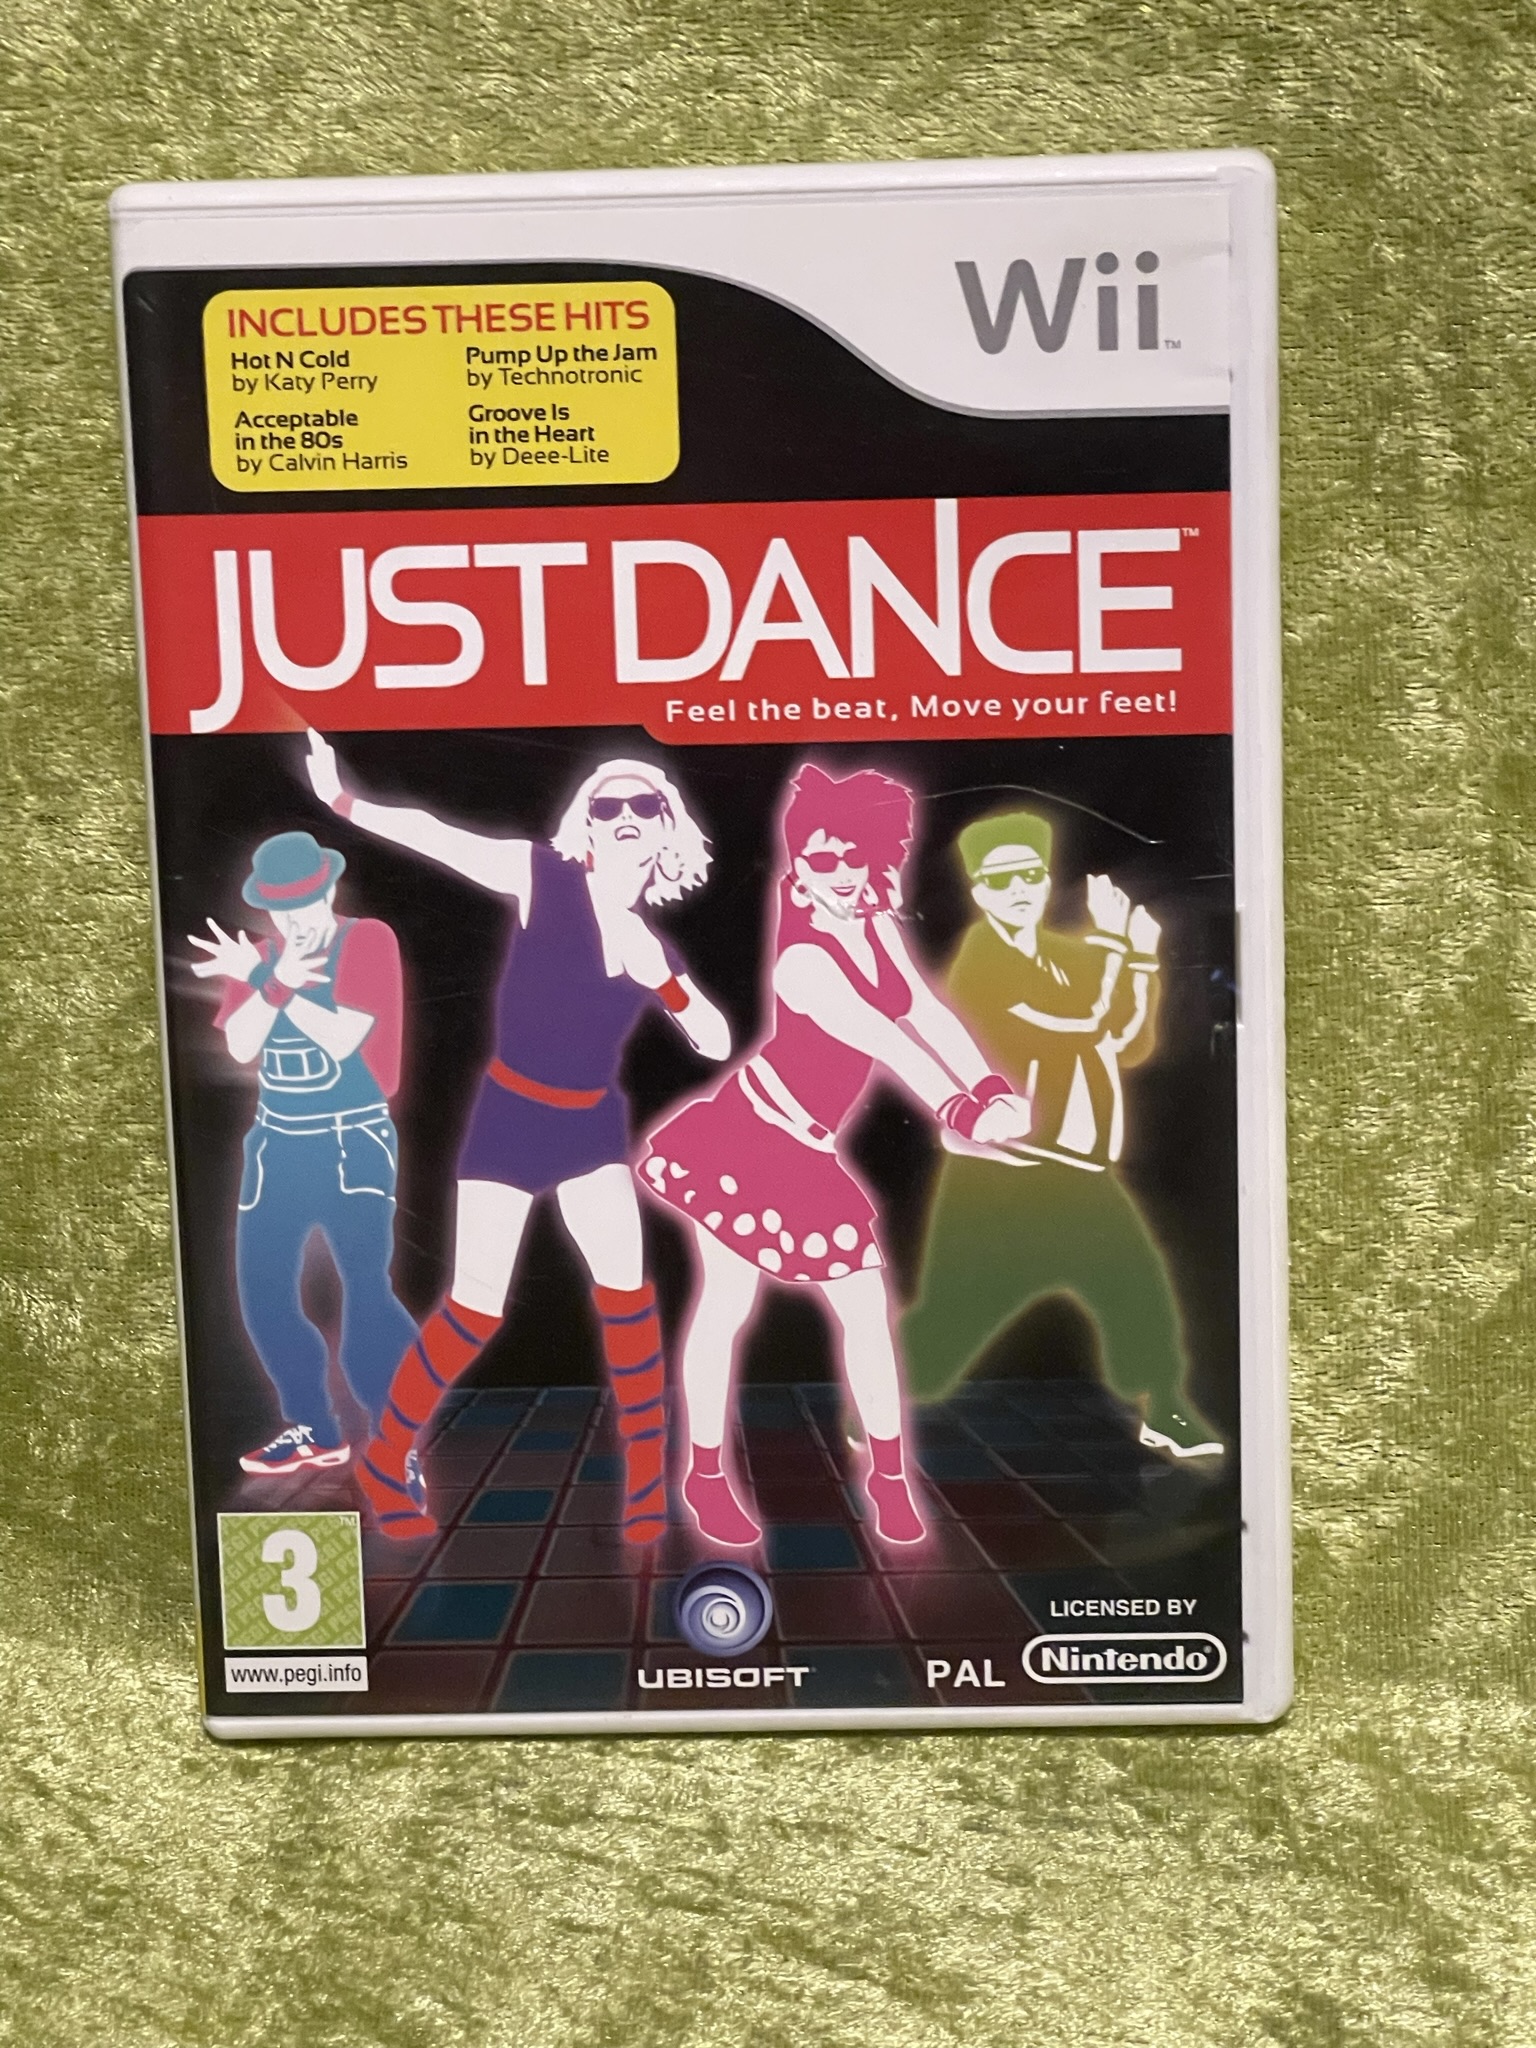 Just Dance 